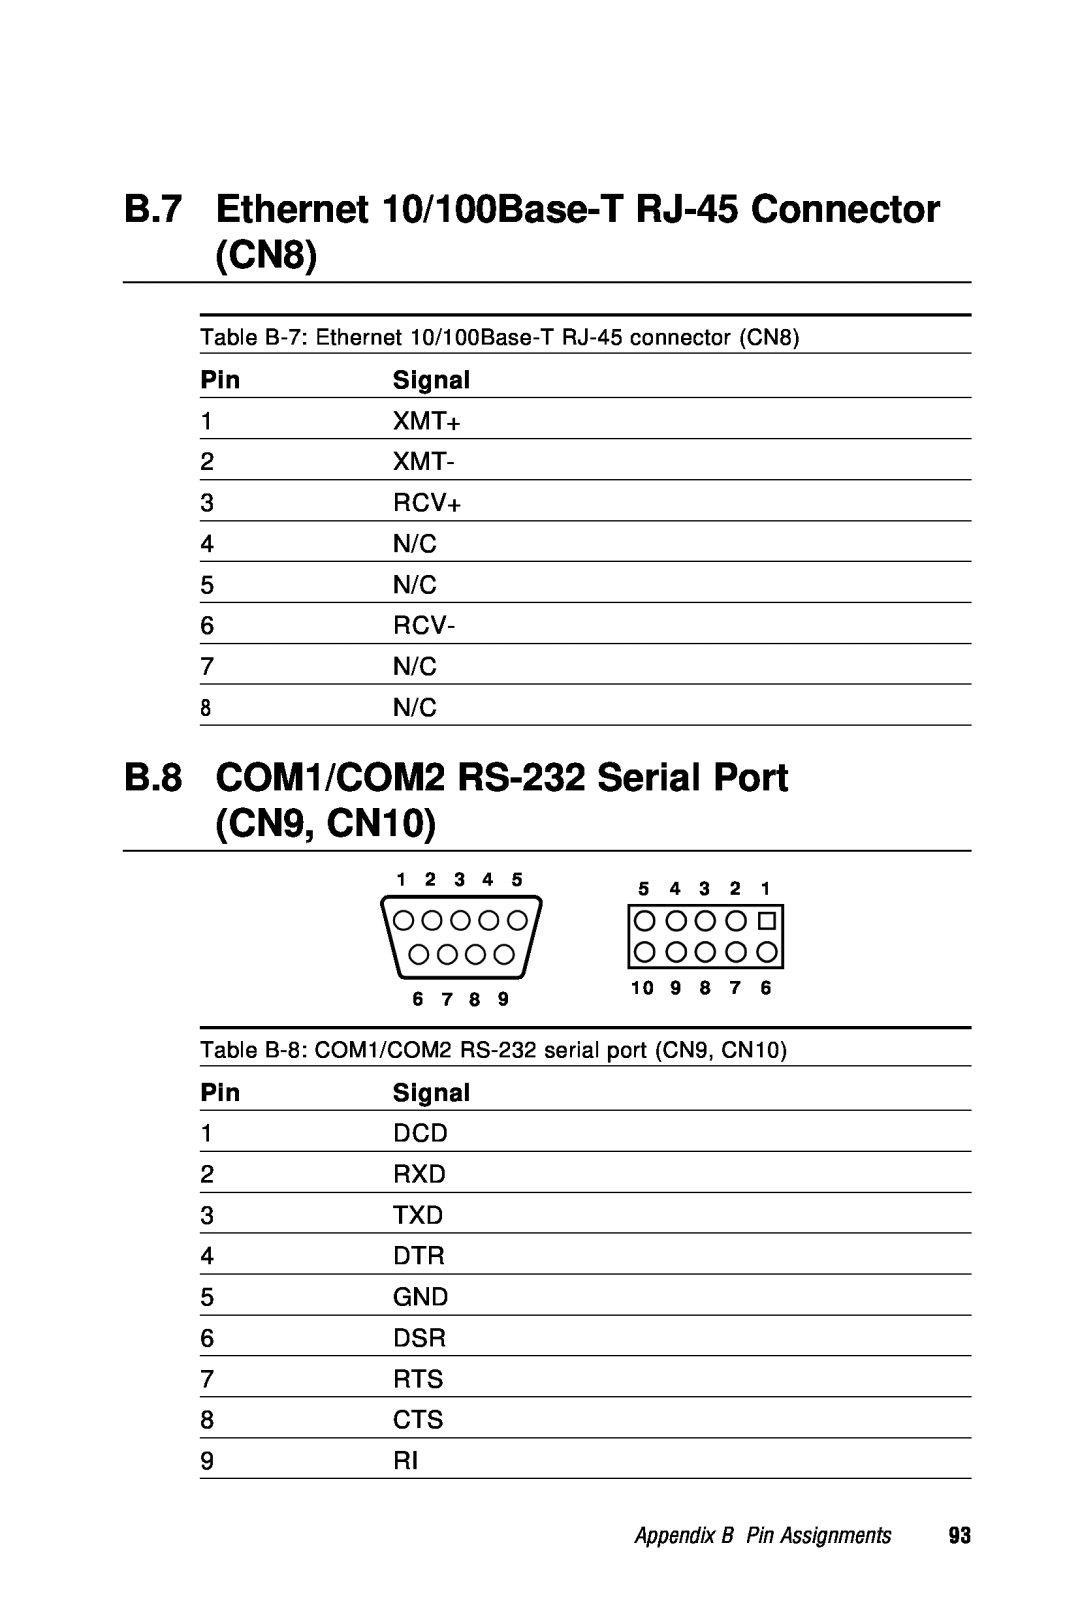 Advantech PCA-6359 user manual B.7 Ethernet 10/100Base-T RJ-45 Connector CN8, B.8 COM1/COM2 RS-232 Serial Port CN9, CN10 